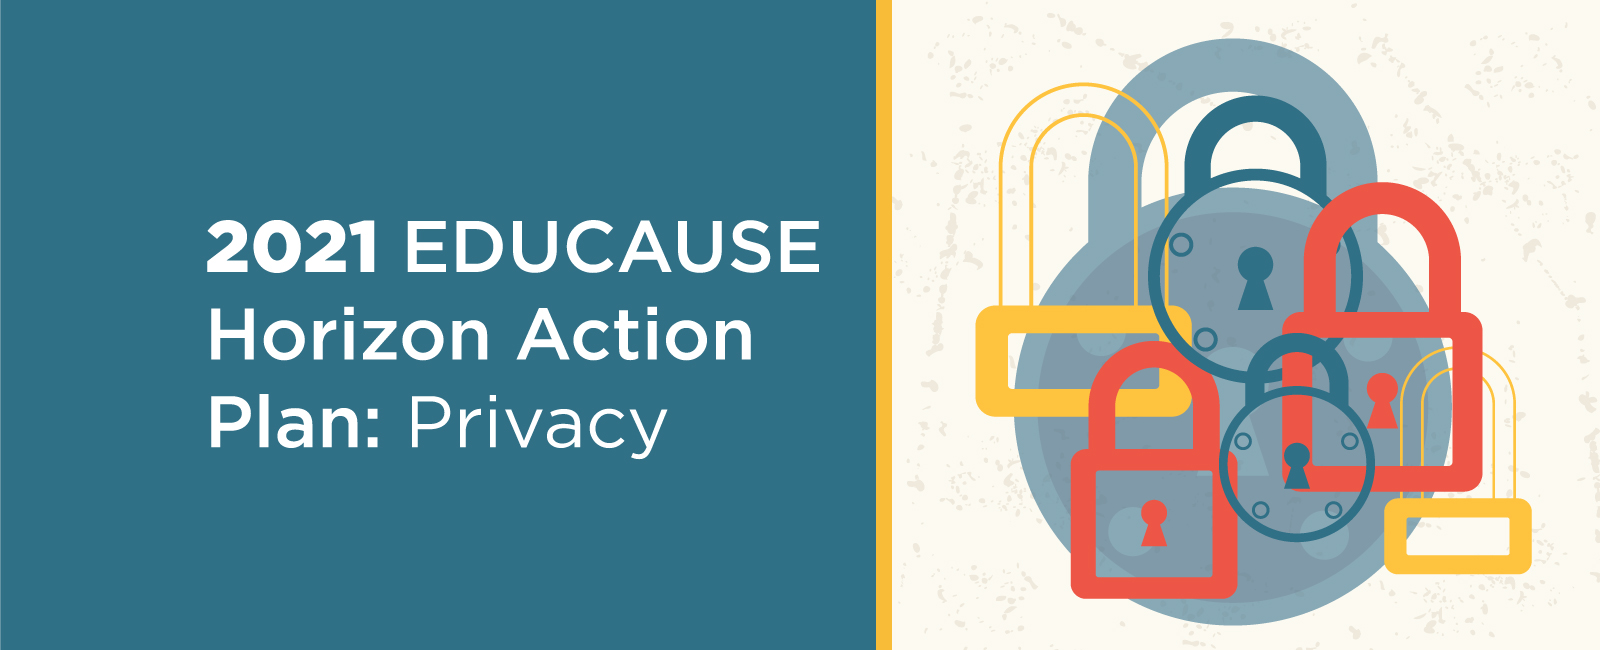 2021 EDUCAUSE Horizon Action Plan: Privacy